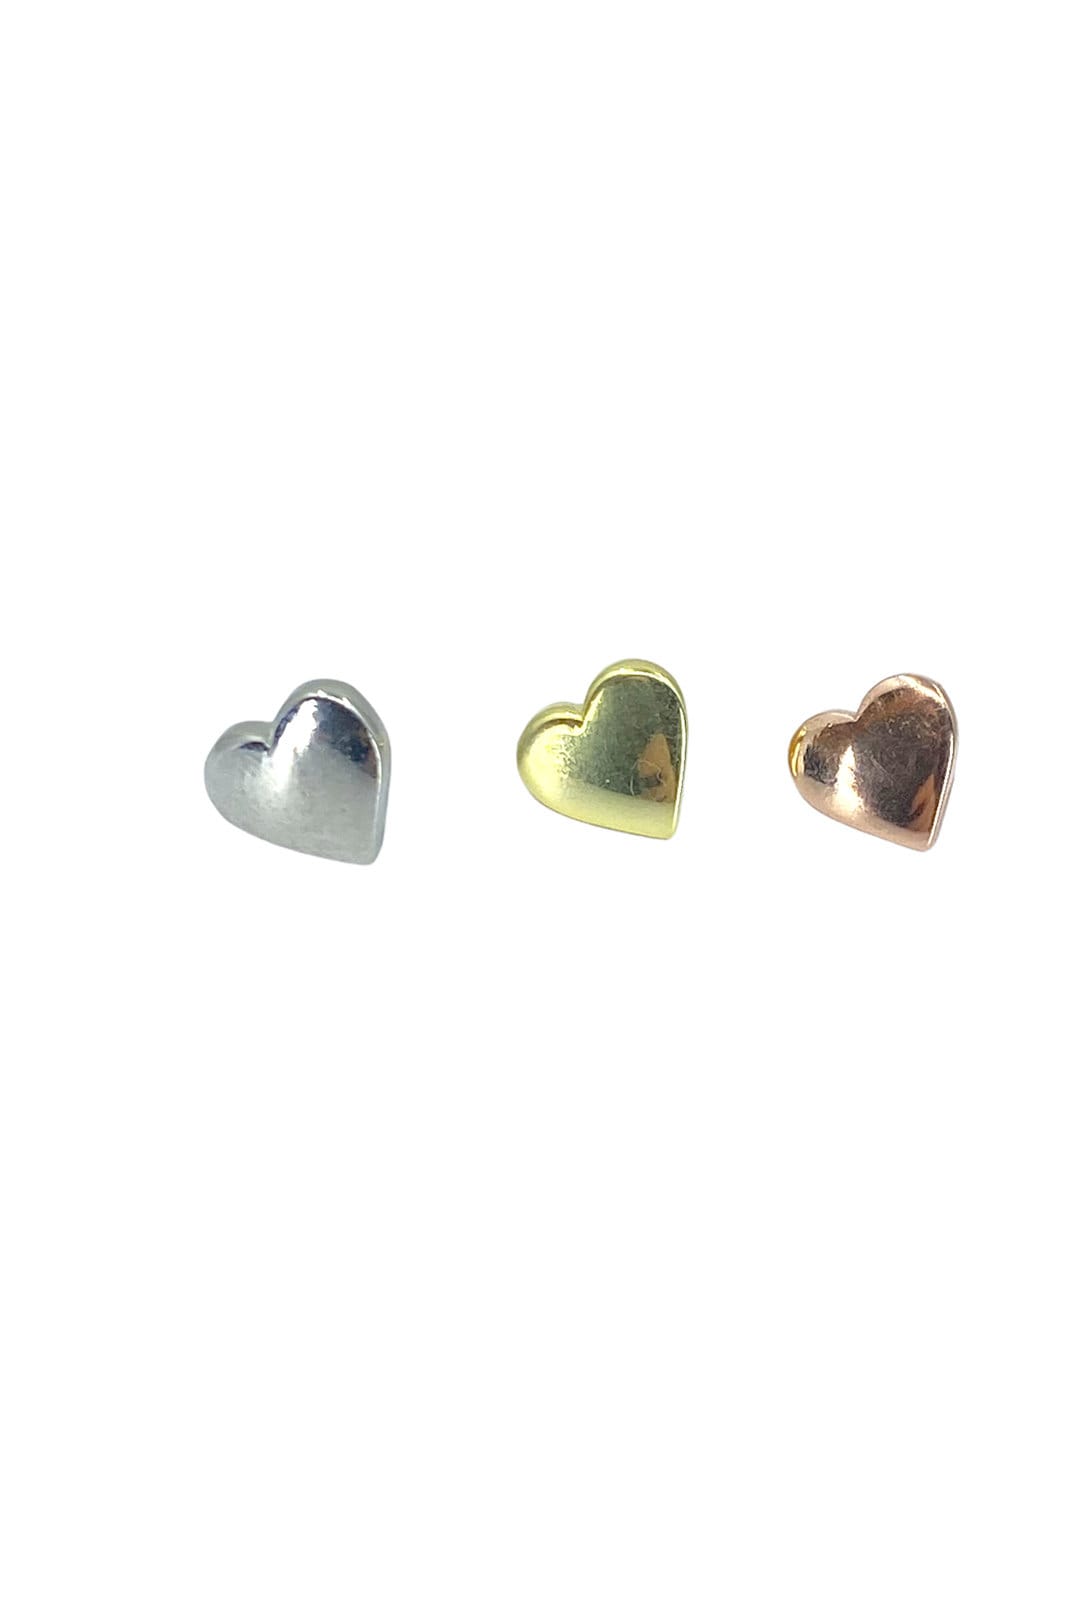 Gold Heart Thumb Tacks. Push Pins. Gold Hearts. Heart Push Pins. Memo  Board. Office Accessories. Heart Tacks. Dorm Room Decor. 